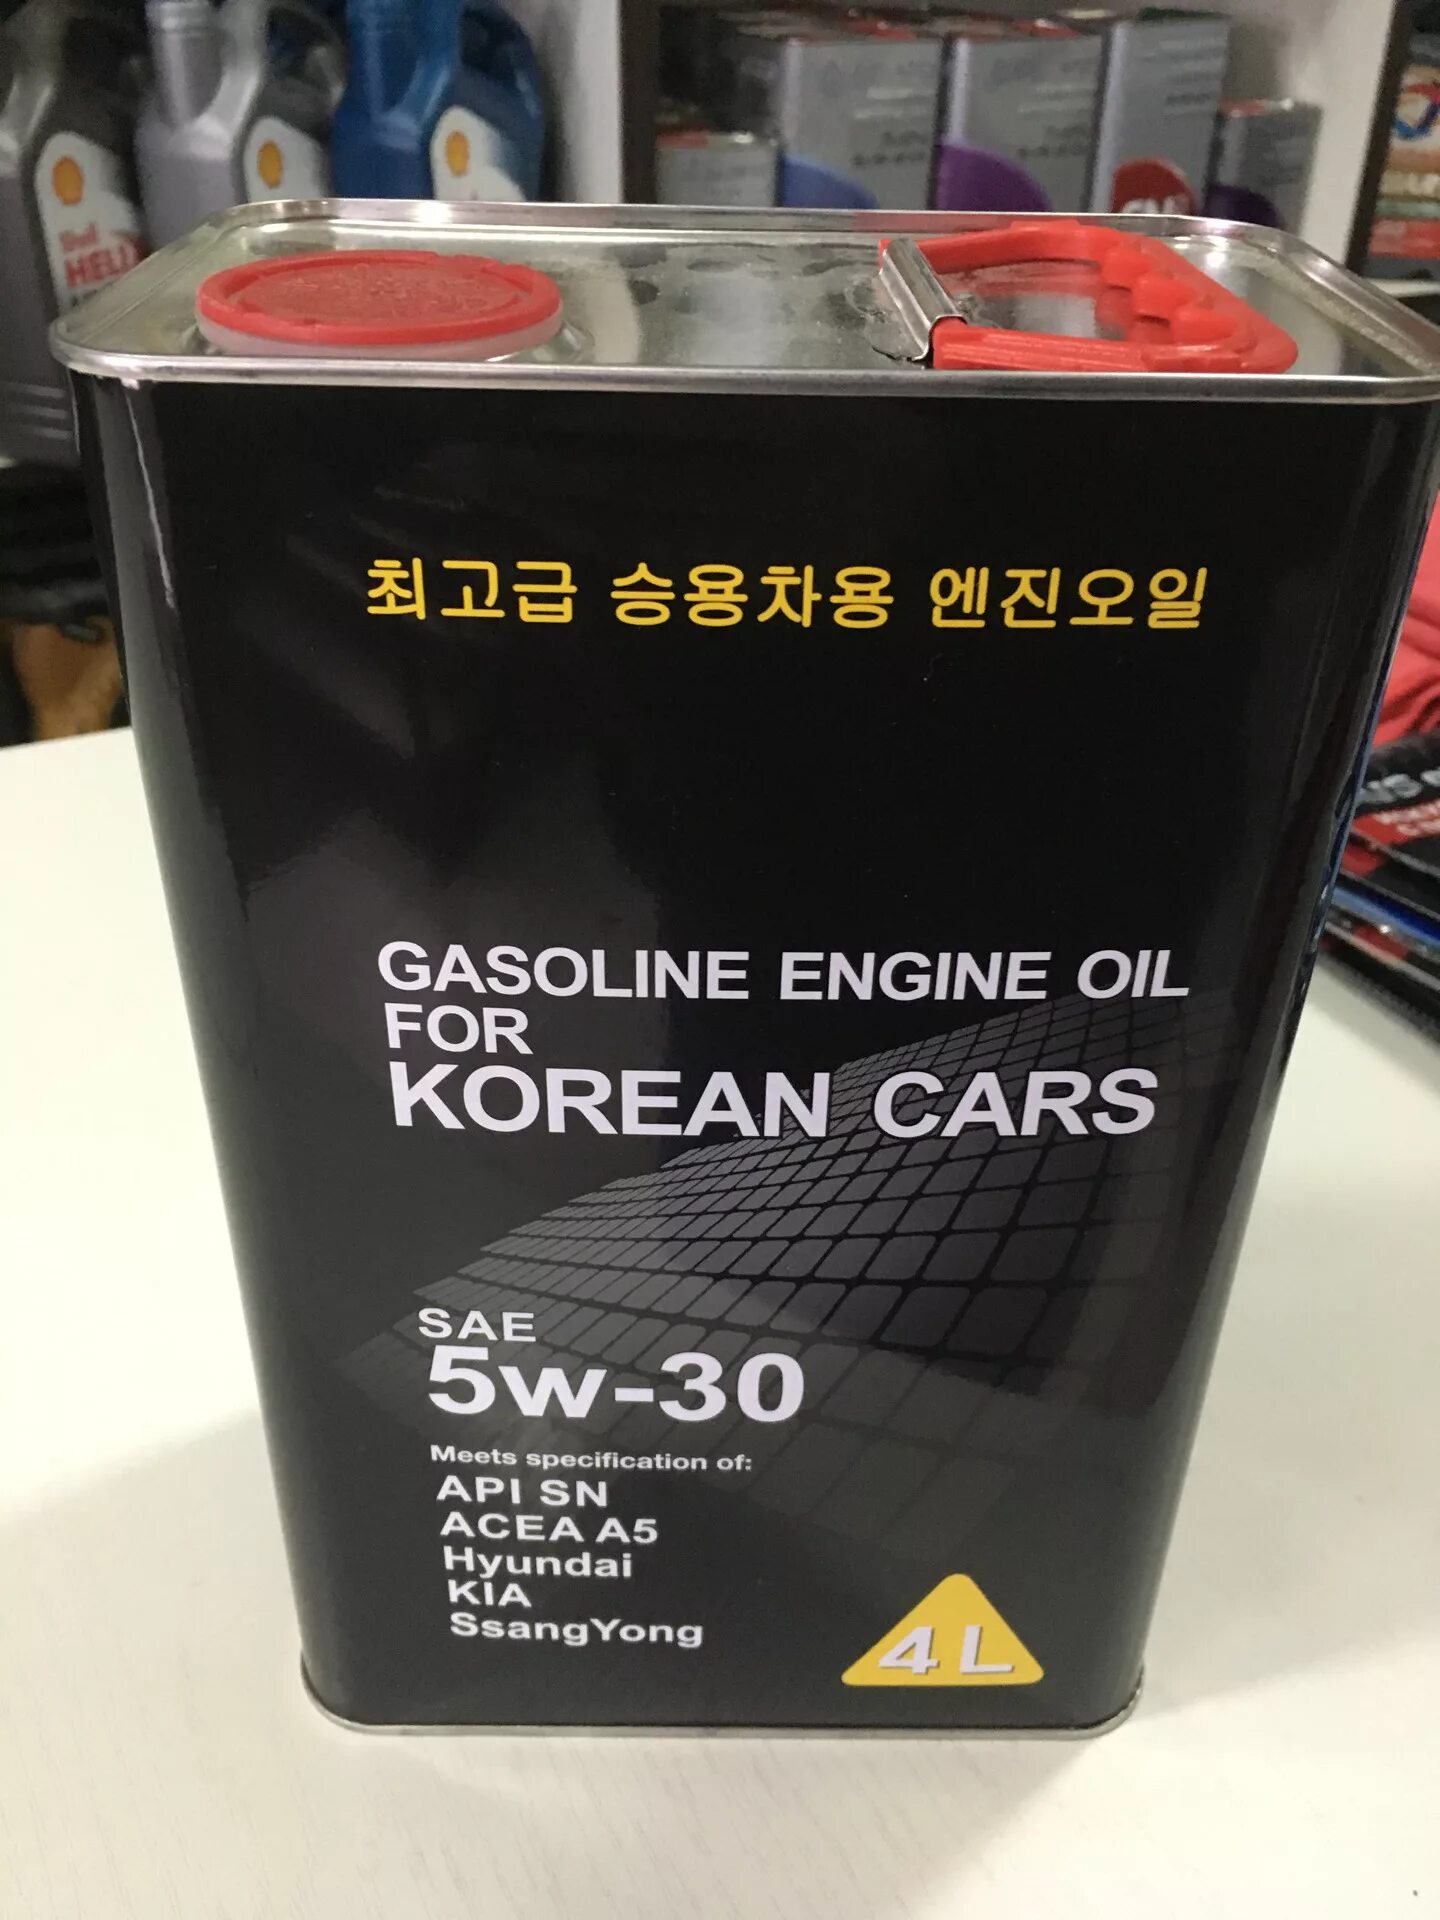 Gasoline engine Oil for korean cars SAE 5w-30 артикул. Gasoline engine Oil for korean cars 5w30 артикул. Масло в Хендай Солярис 5w30 железная банка. Моторное масло Корея Хюндай. Авторусь масло 5w30